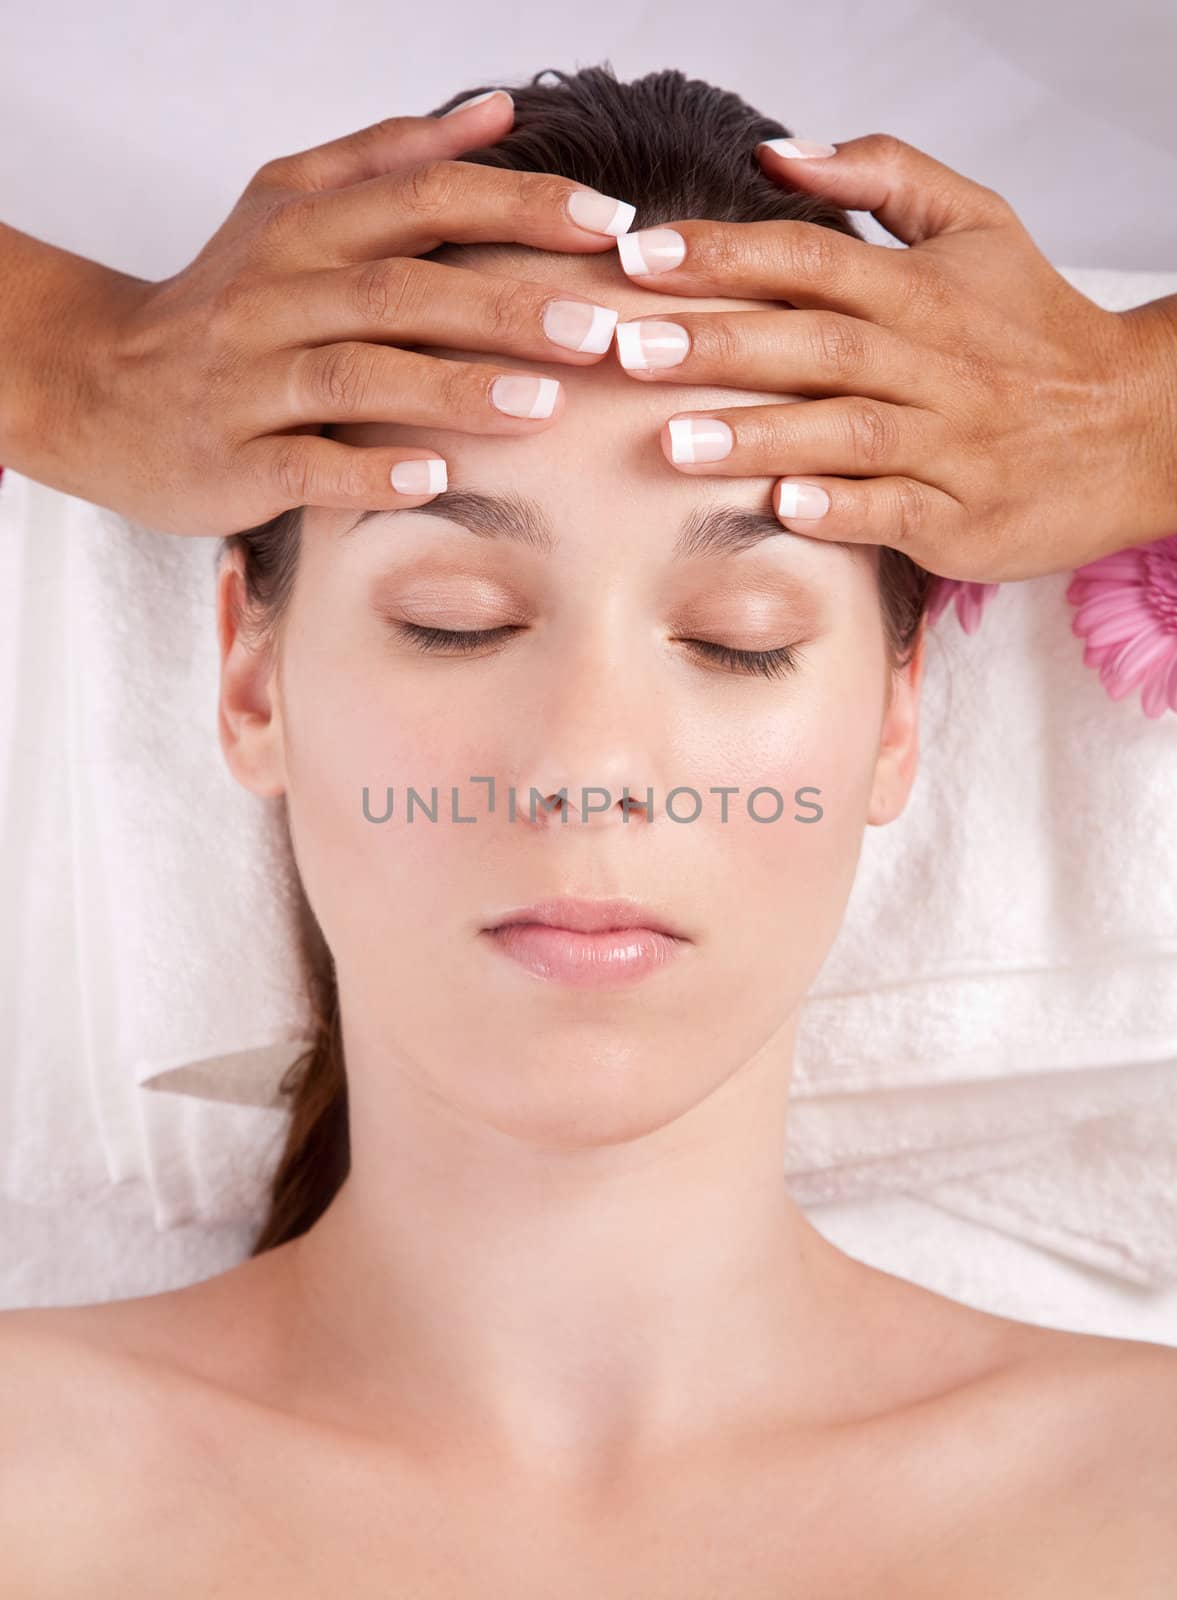 Getting a massage by Fotosmurf